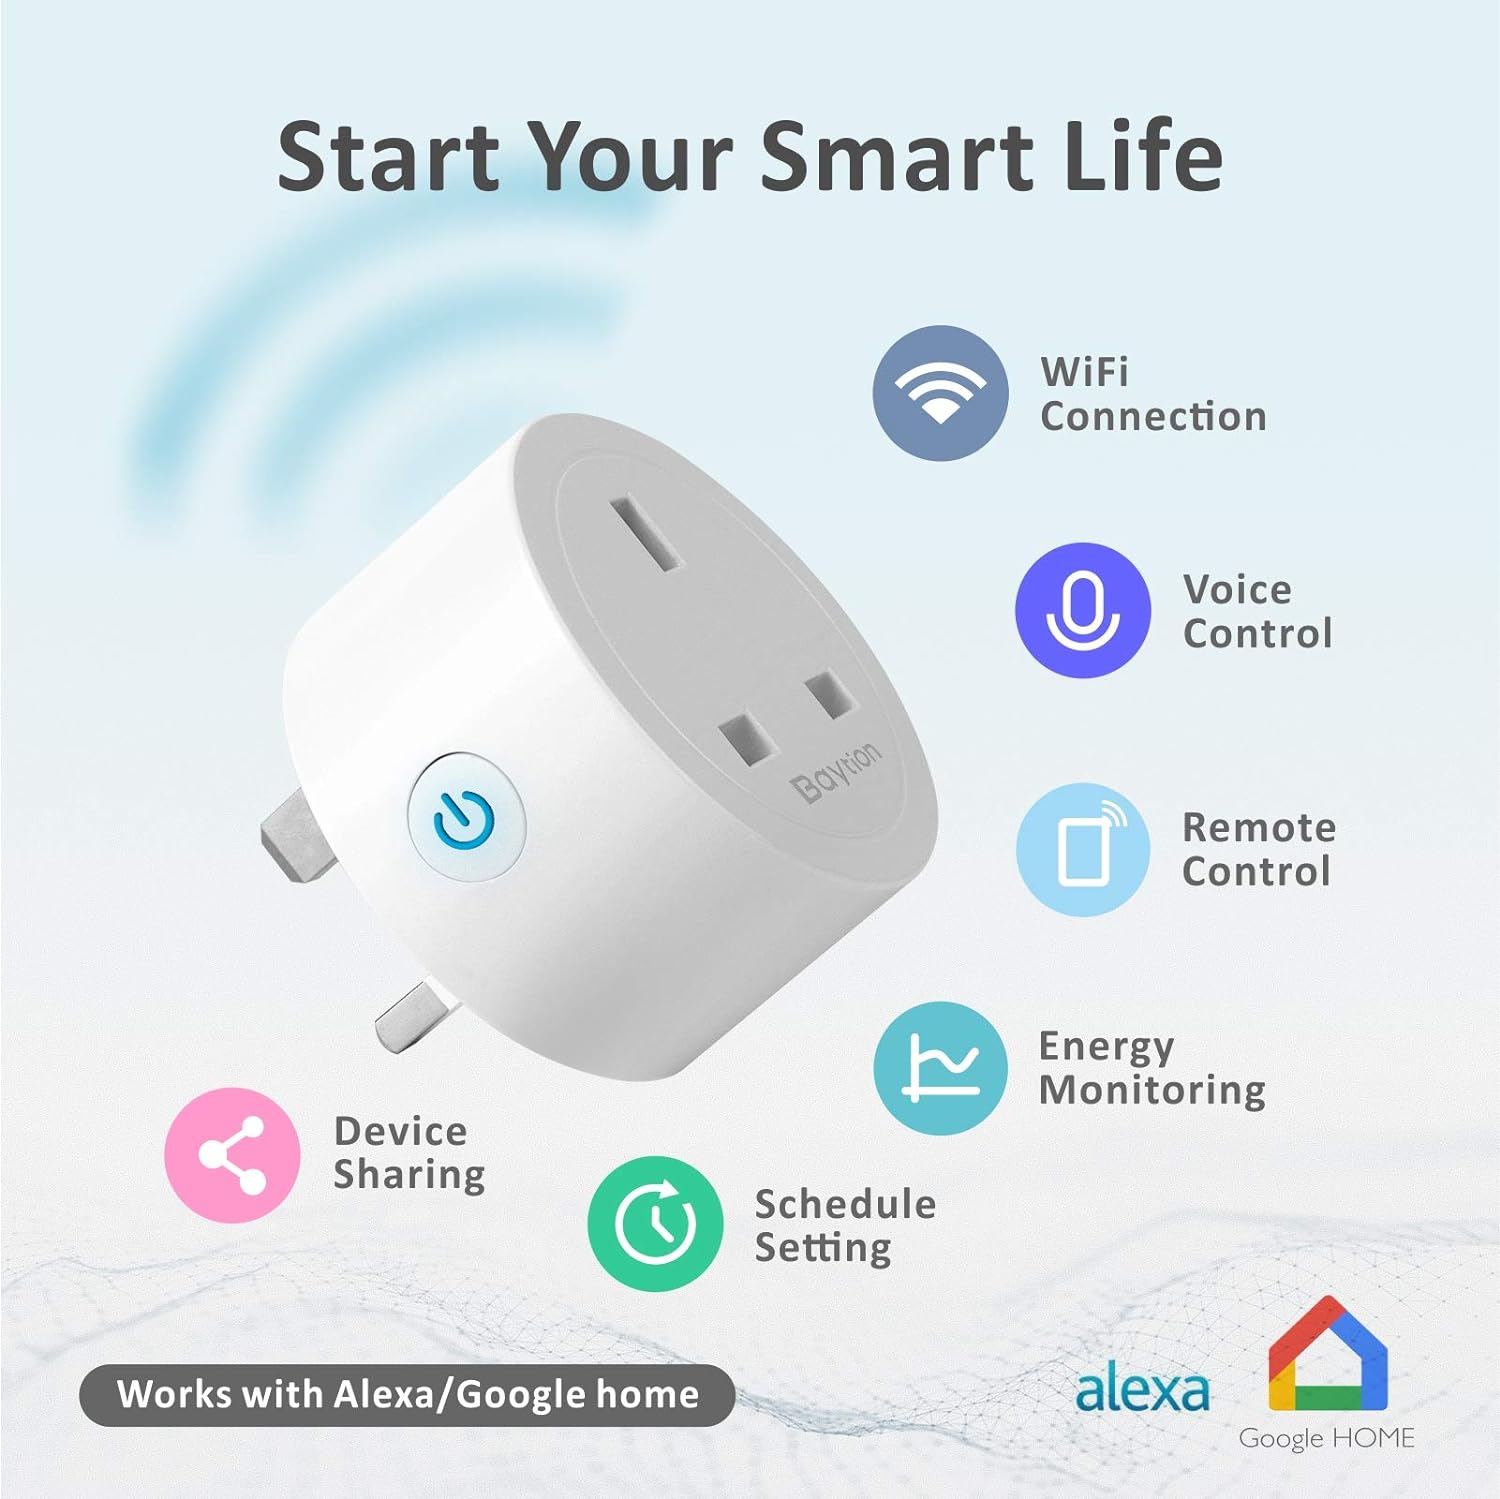 WiFi Smart Plug, Baytion 16A Energy Monitoring WLAN Smart Plug Socket